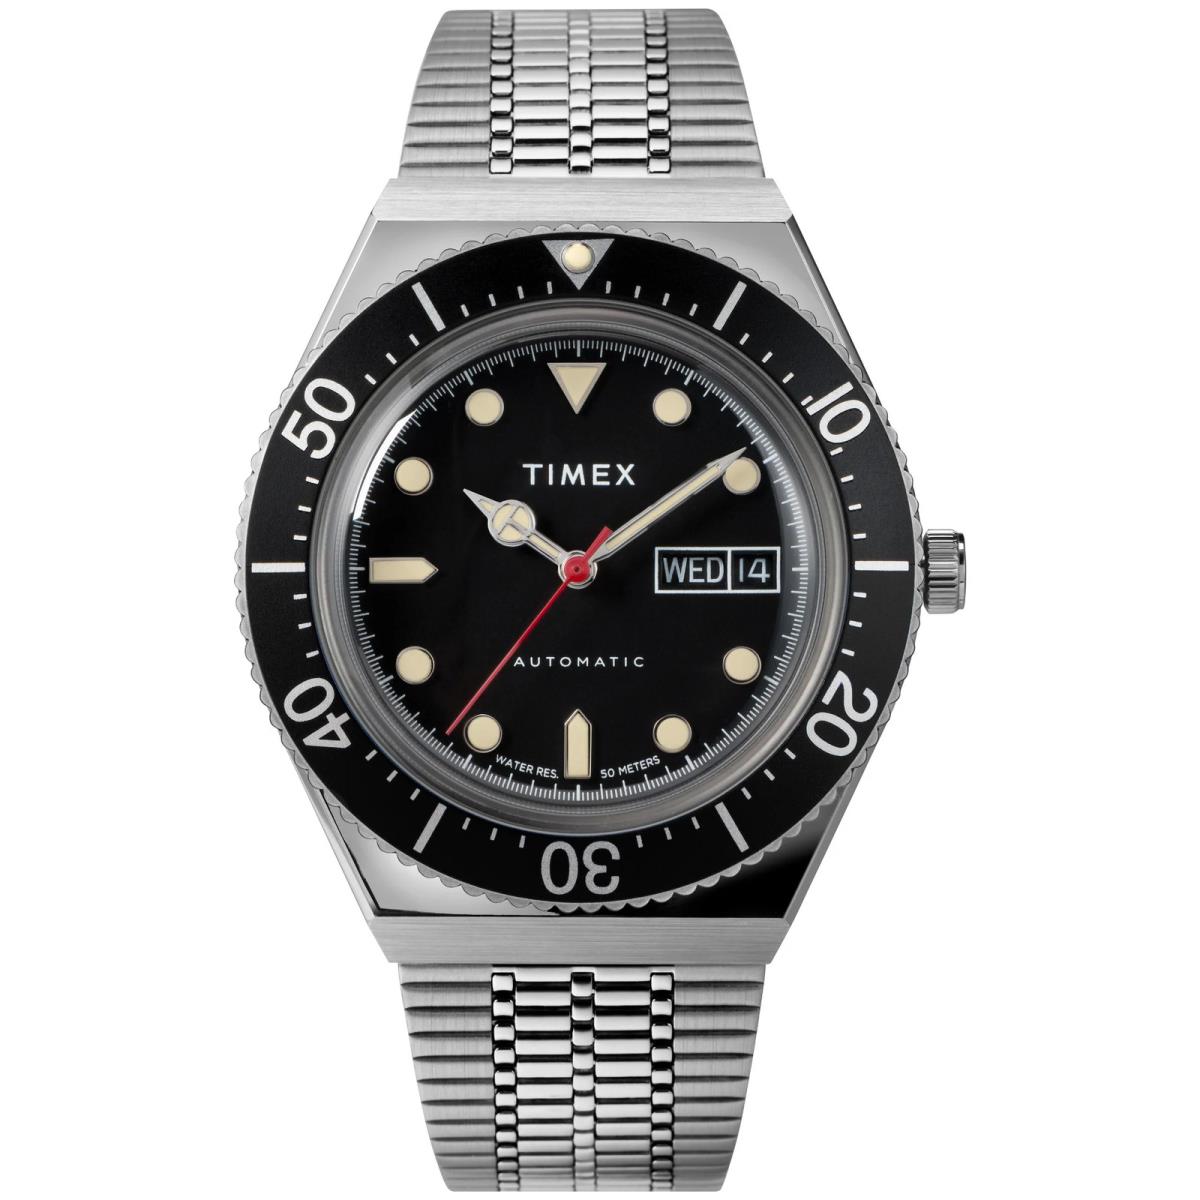 Timex M79 Automatic 40mm Silver Black Watch